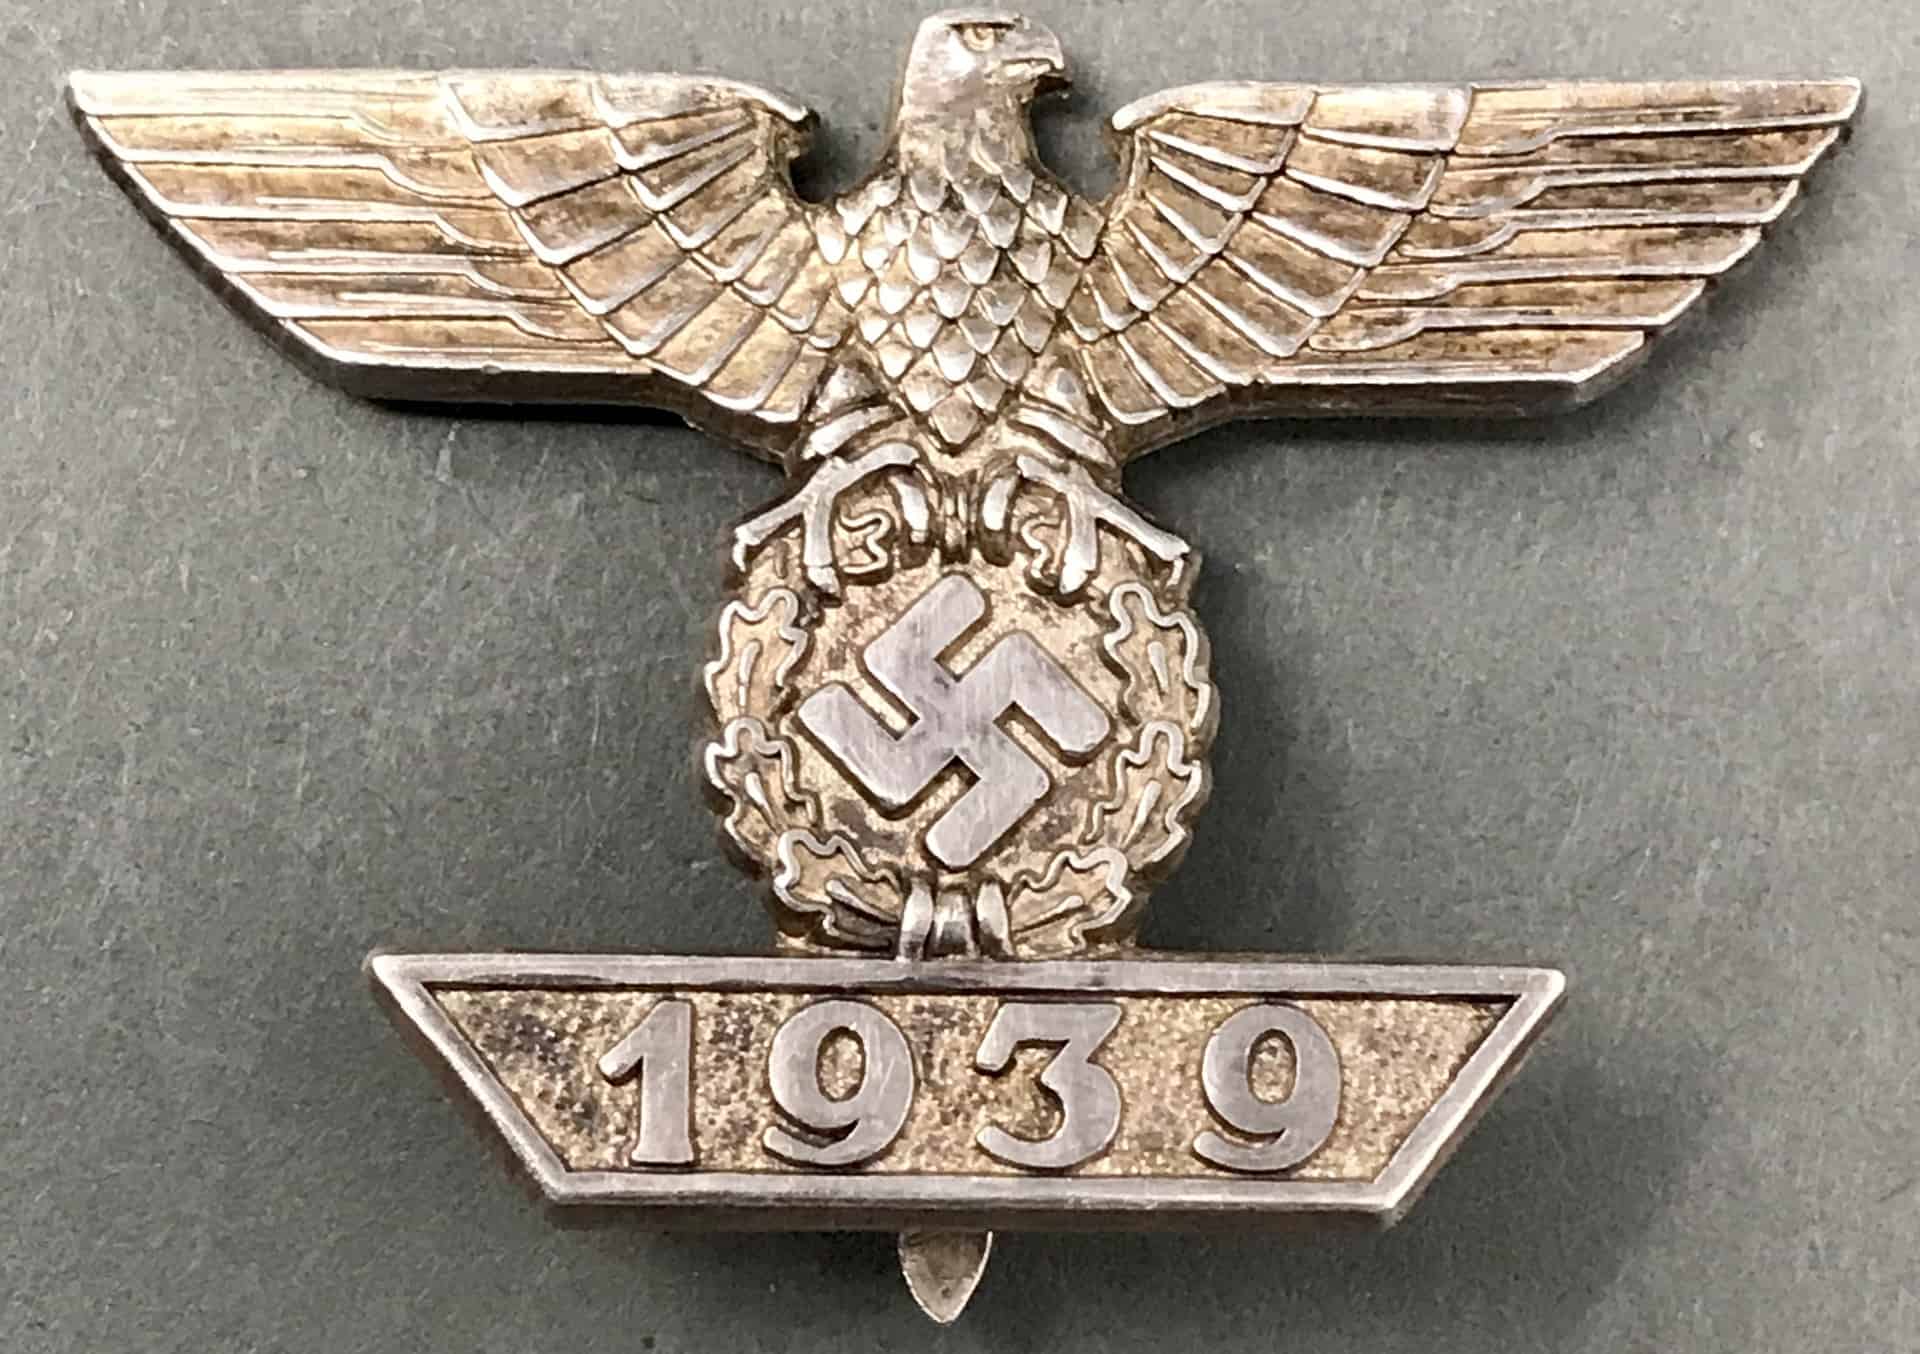 WWII/WW2 German/Germany LDO Army Combat Badge presentation case or box 